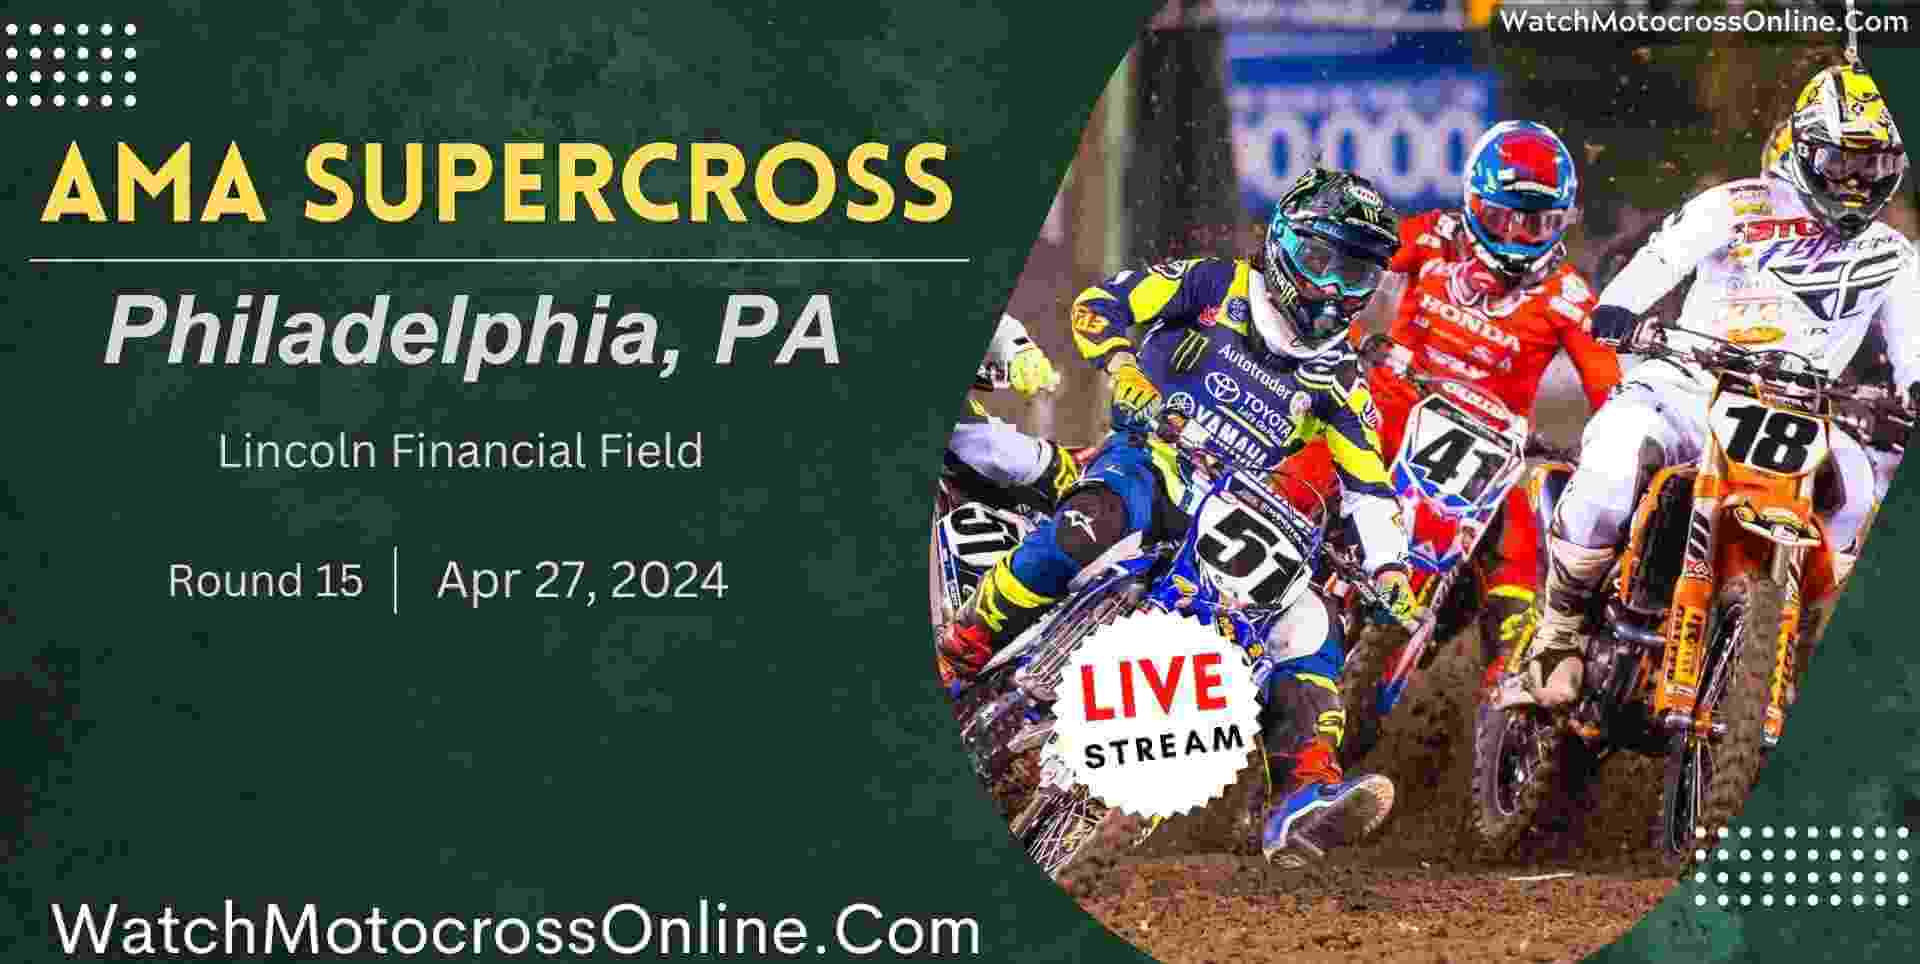 AMA Supercross Philadelphia Live Stream 2024 Round 15 slider